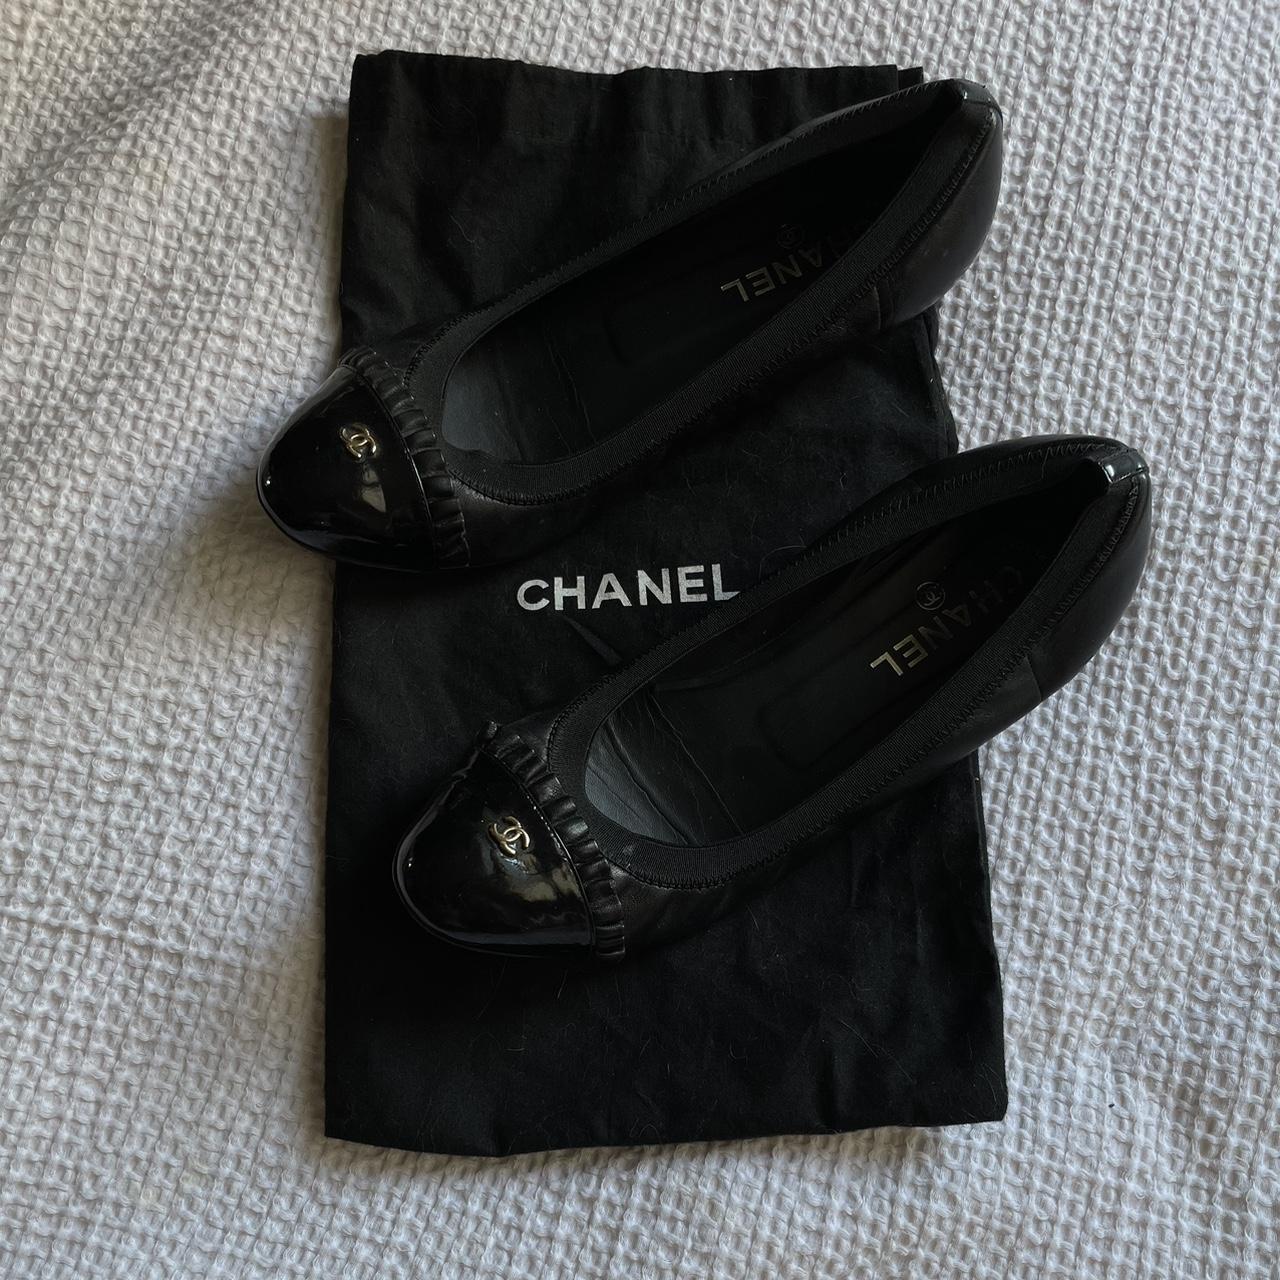 Vintage Chanel ballet flats w/ patent leather toes, - Depop